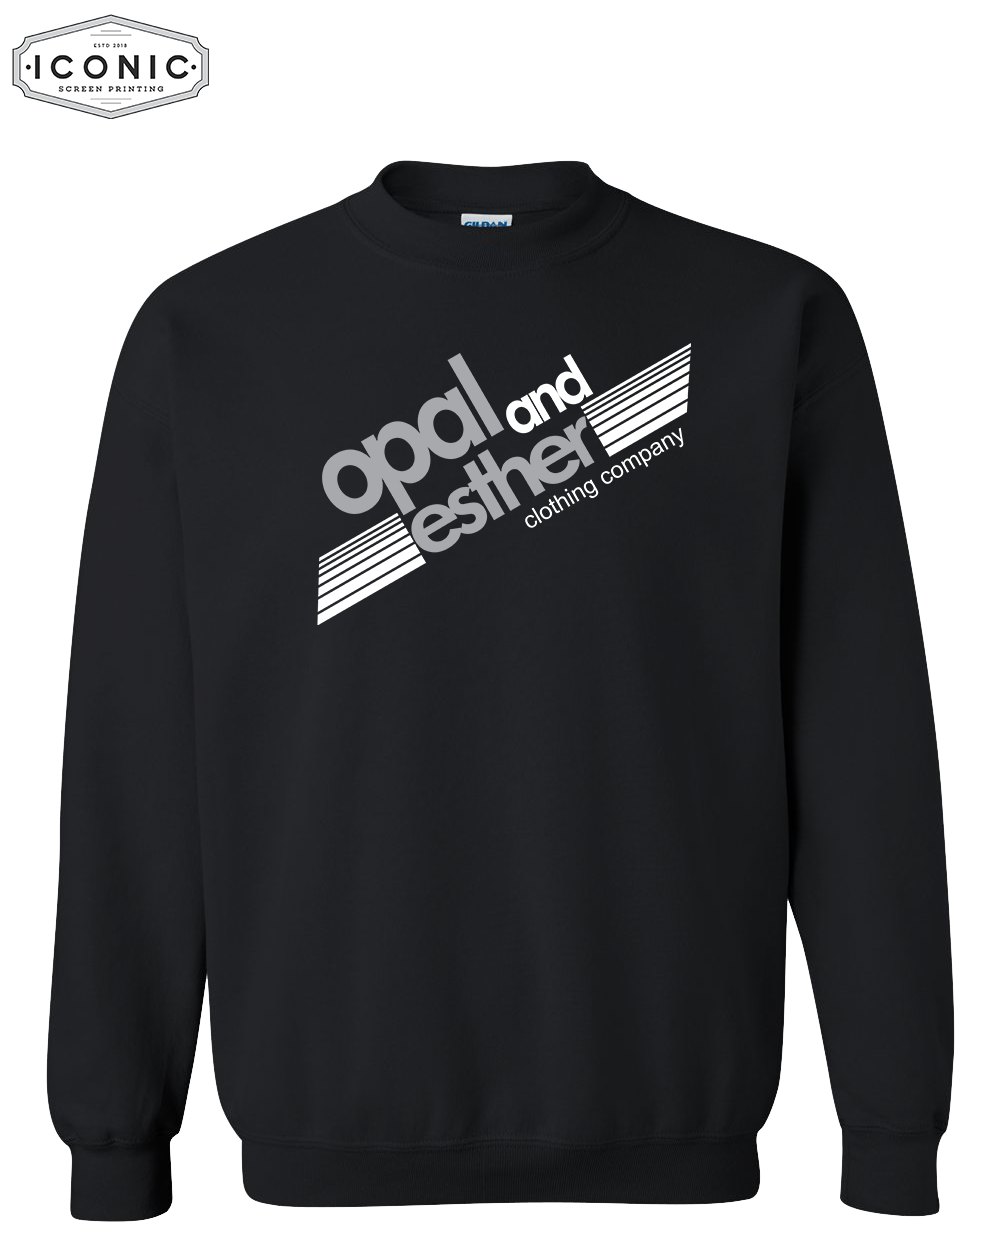 Opal & Esther Angle - Heavy Blend Sweatshirt